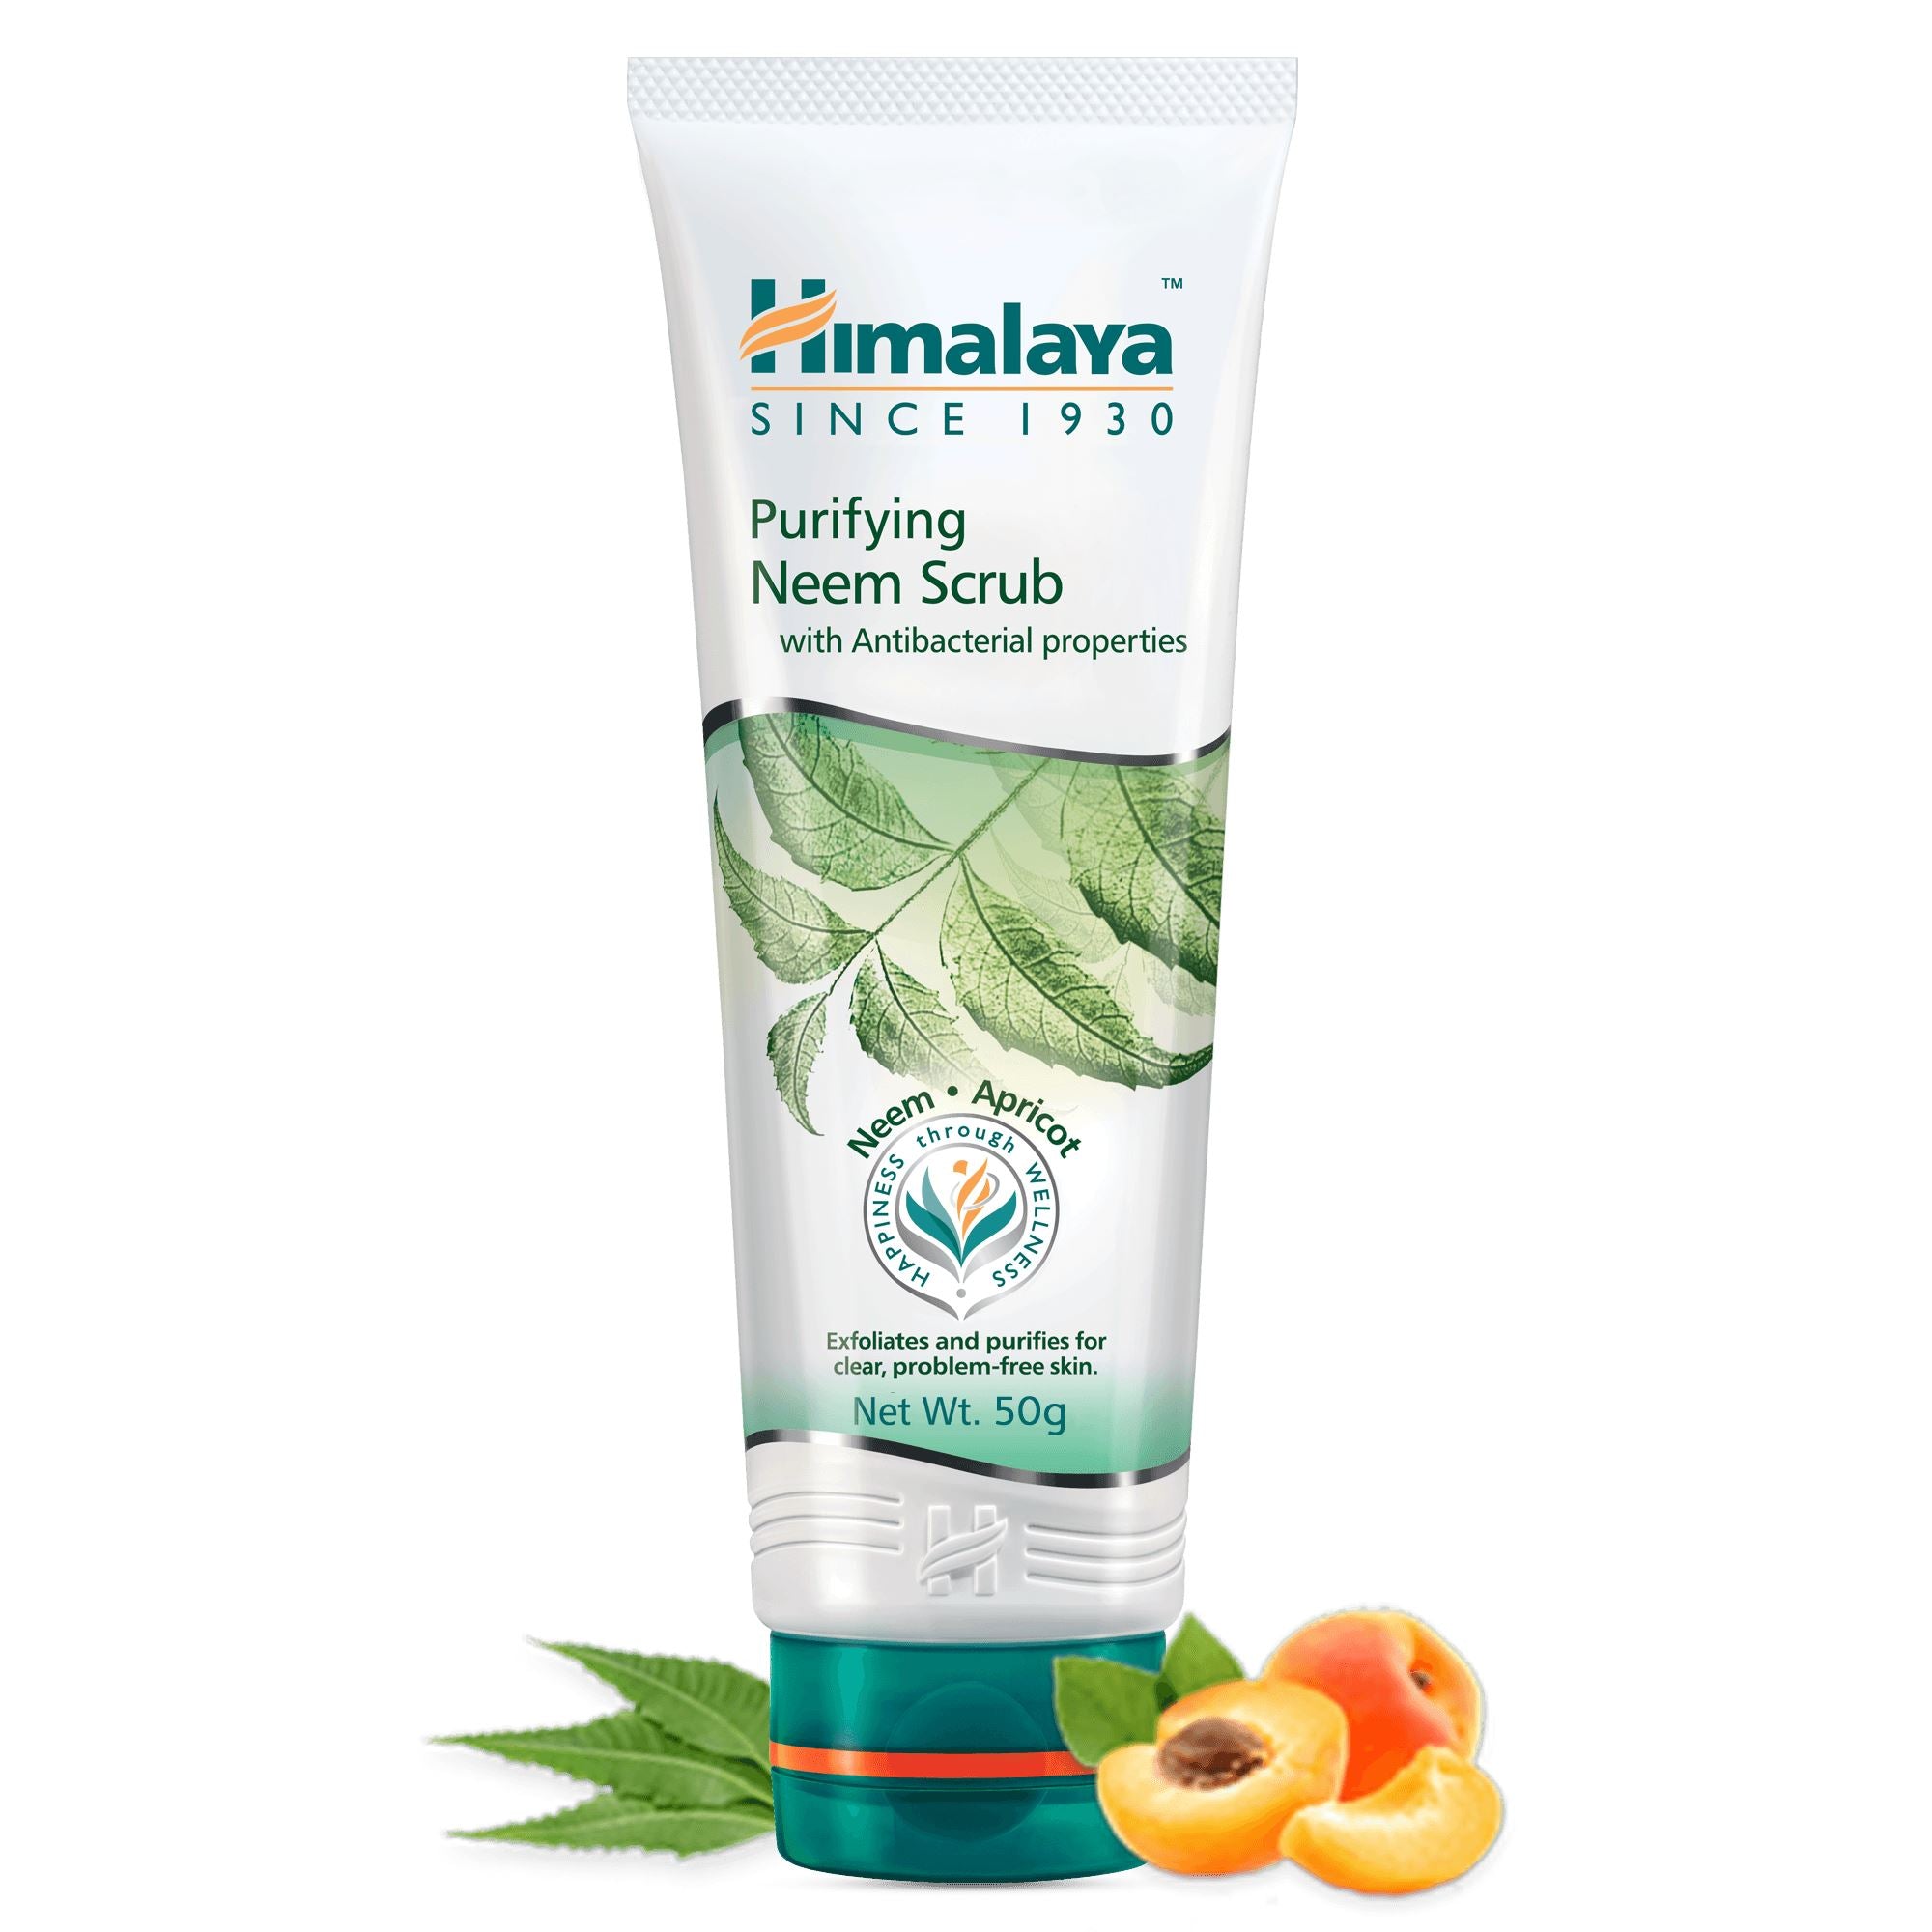 Himalaya Pure Skin Neem Facial Massager kit - Purifying Neem Scrub